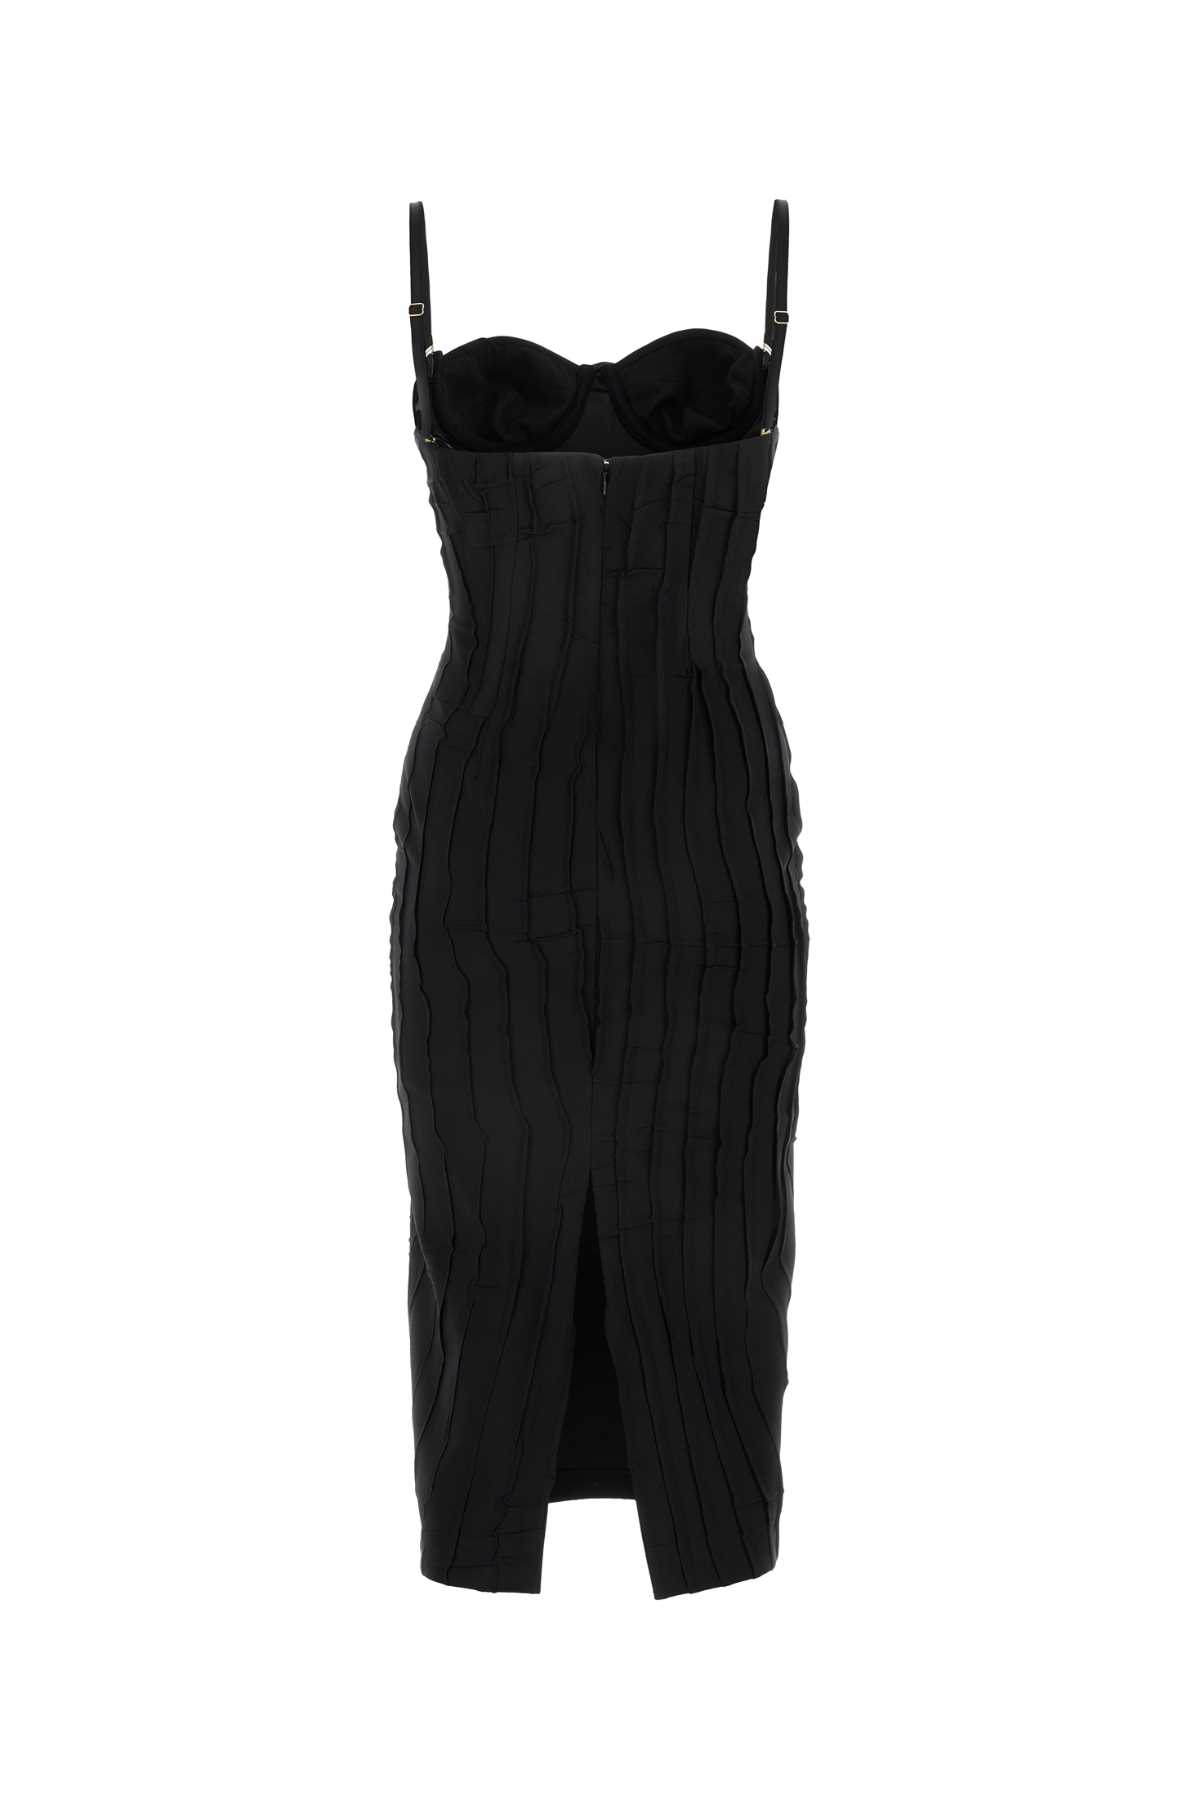 Shop Blumarine Black Polyester Dress